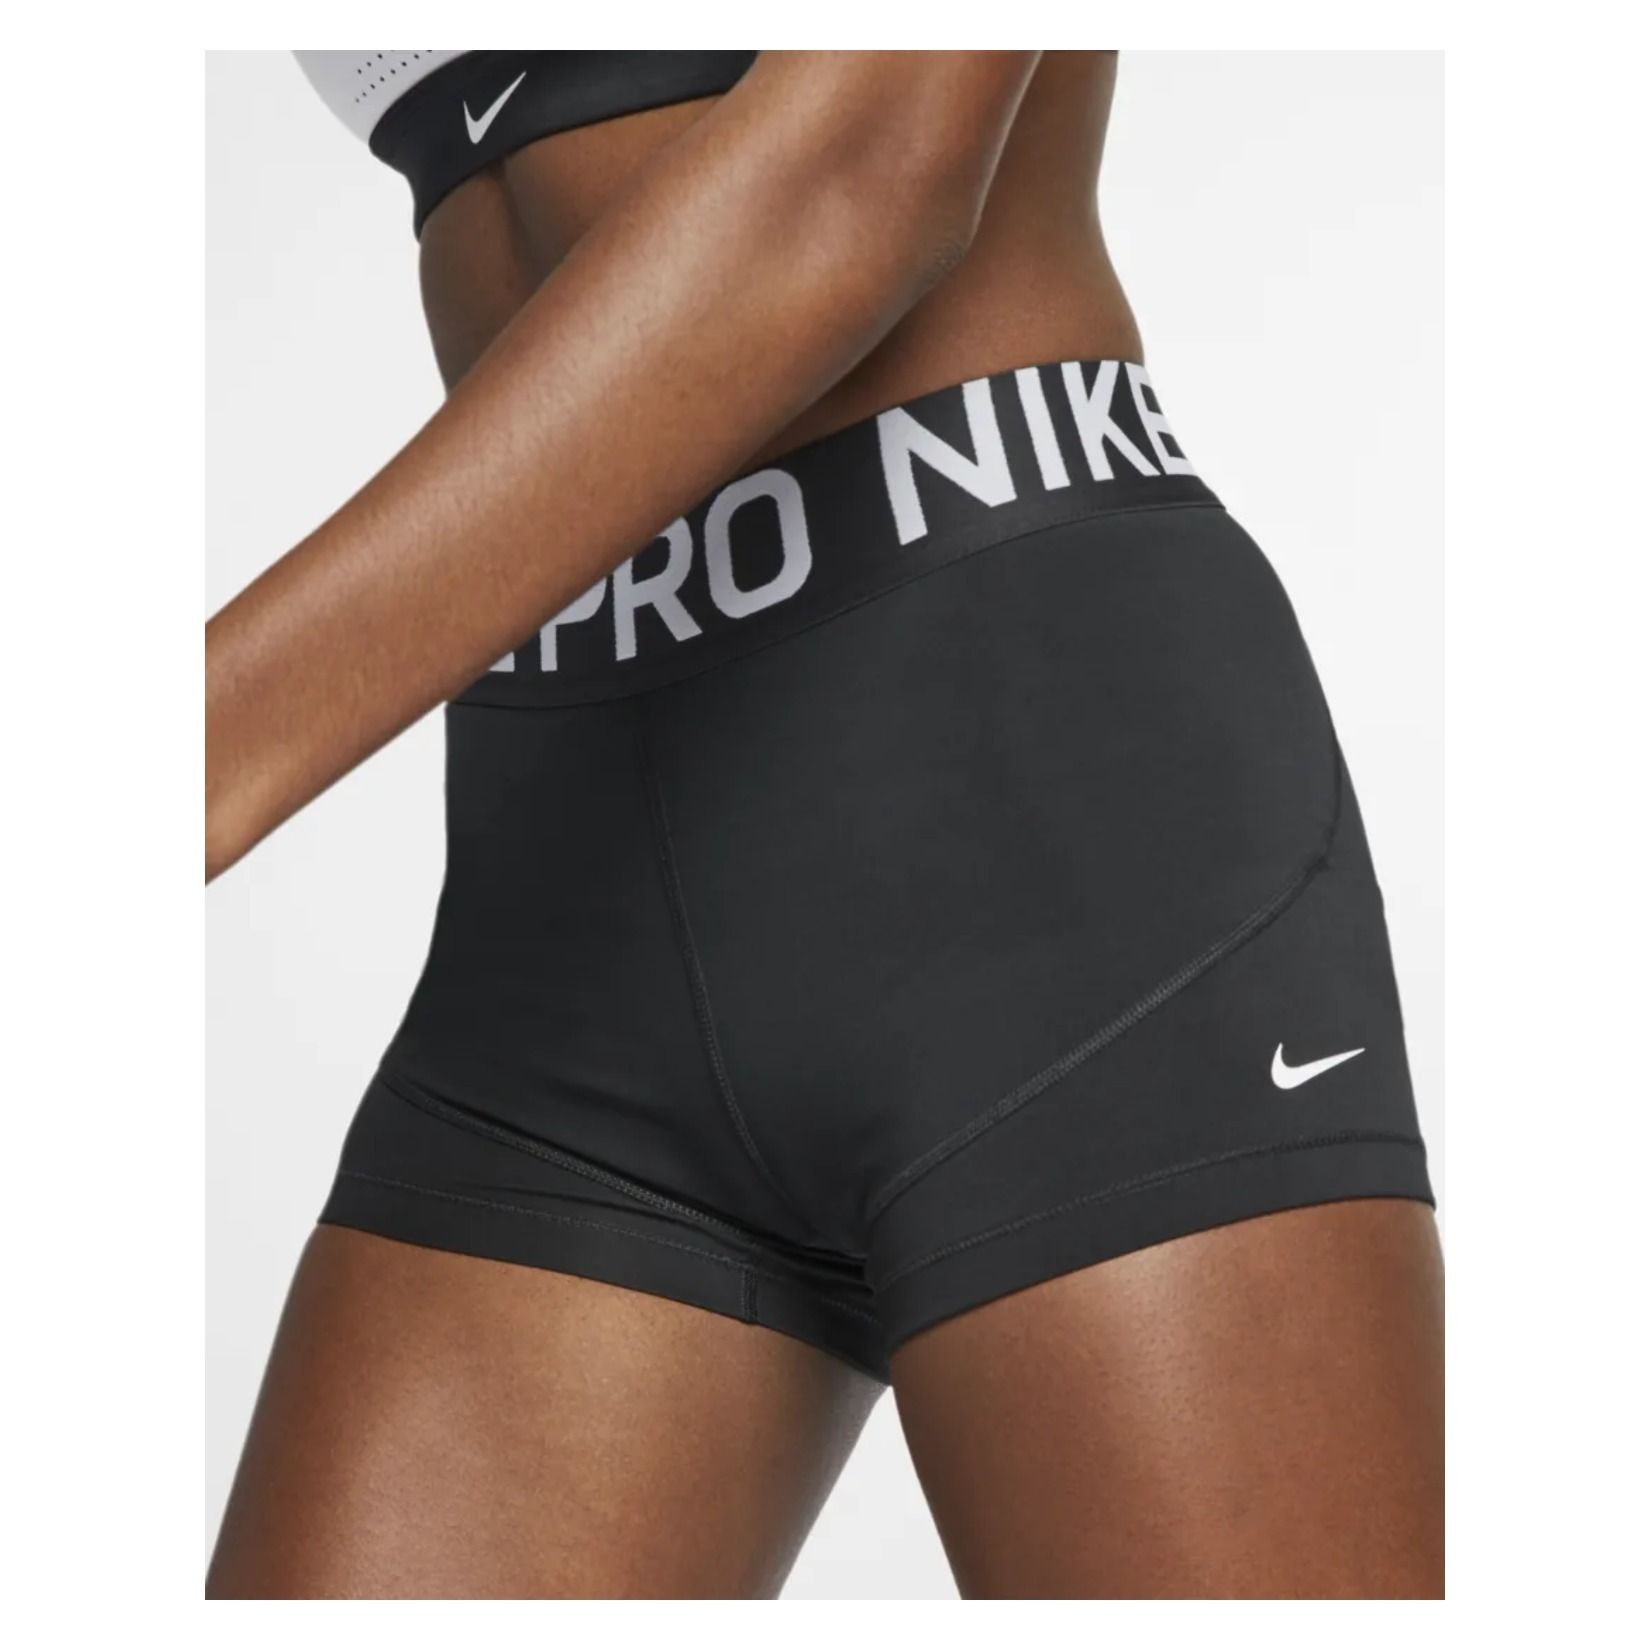 nike women's boxer shorts